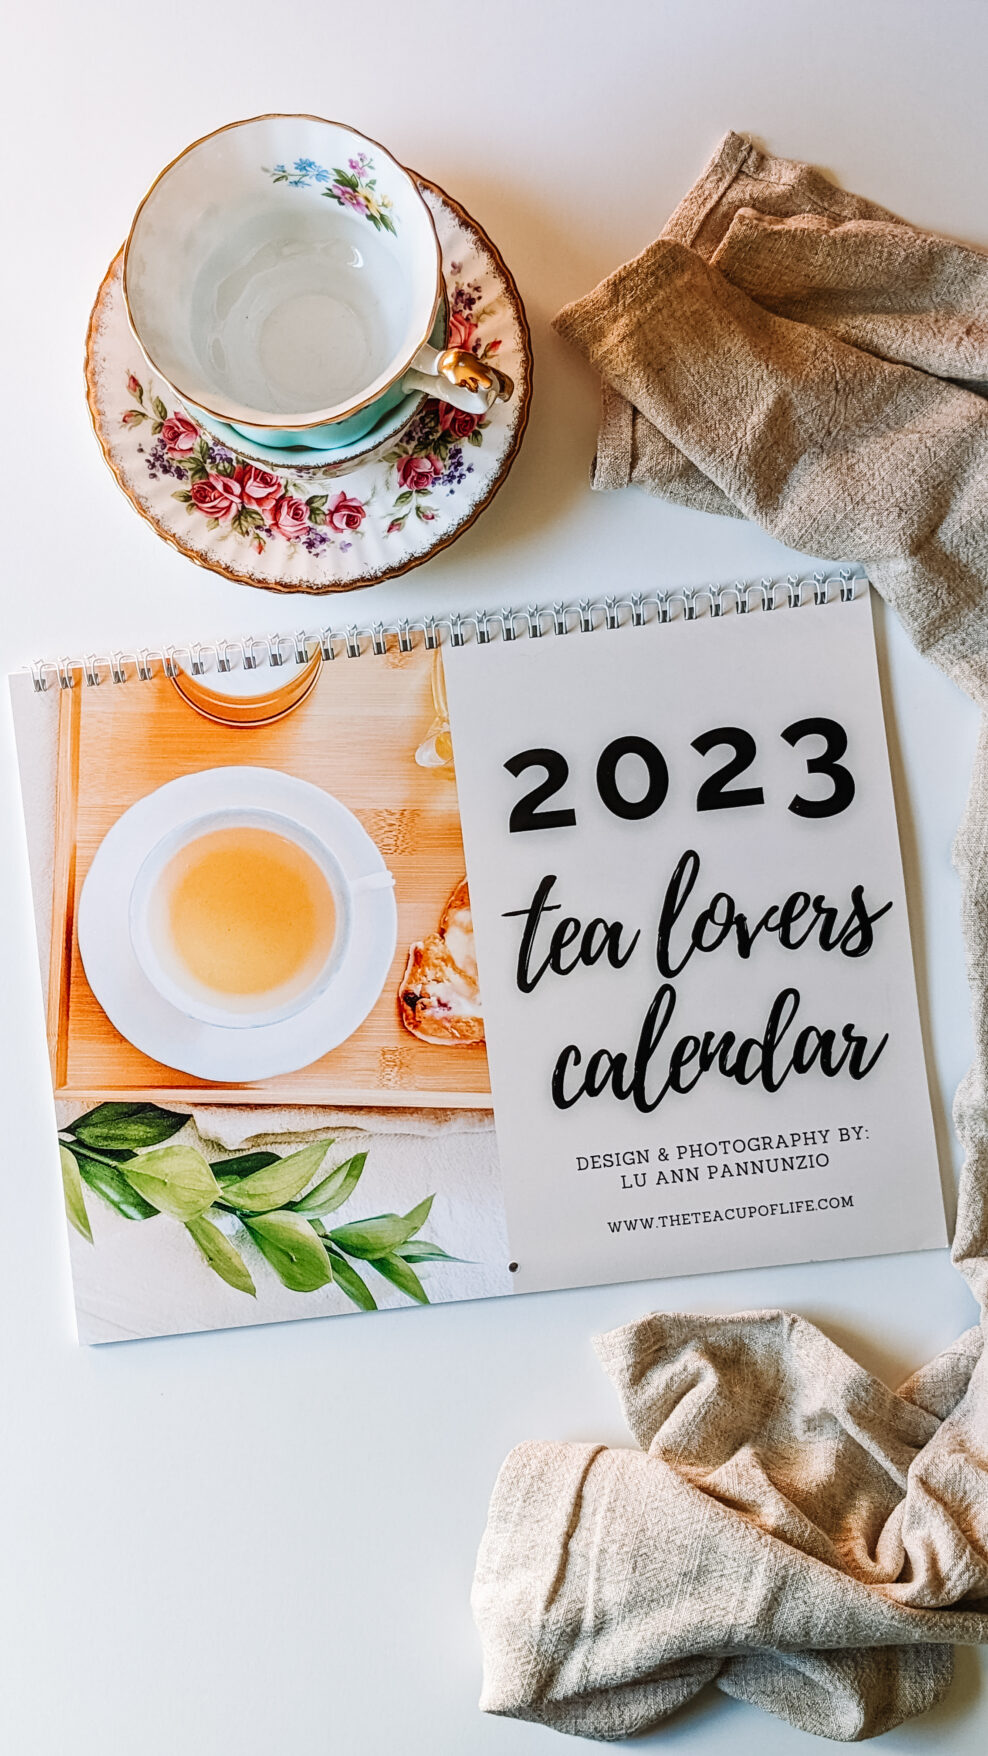 2023-tea-lovers-calendar-the-cup-of-life